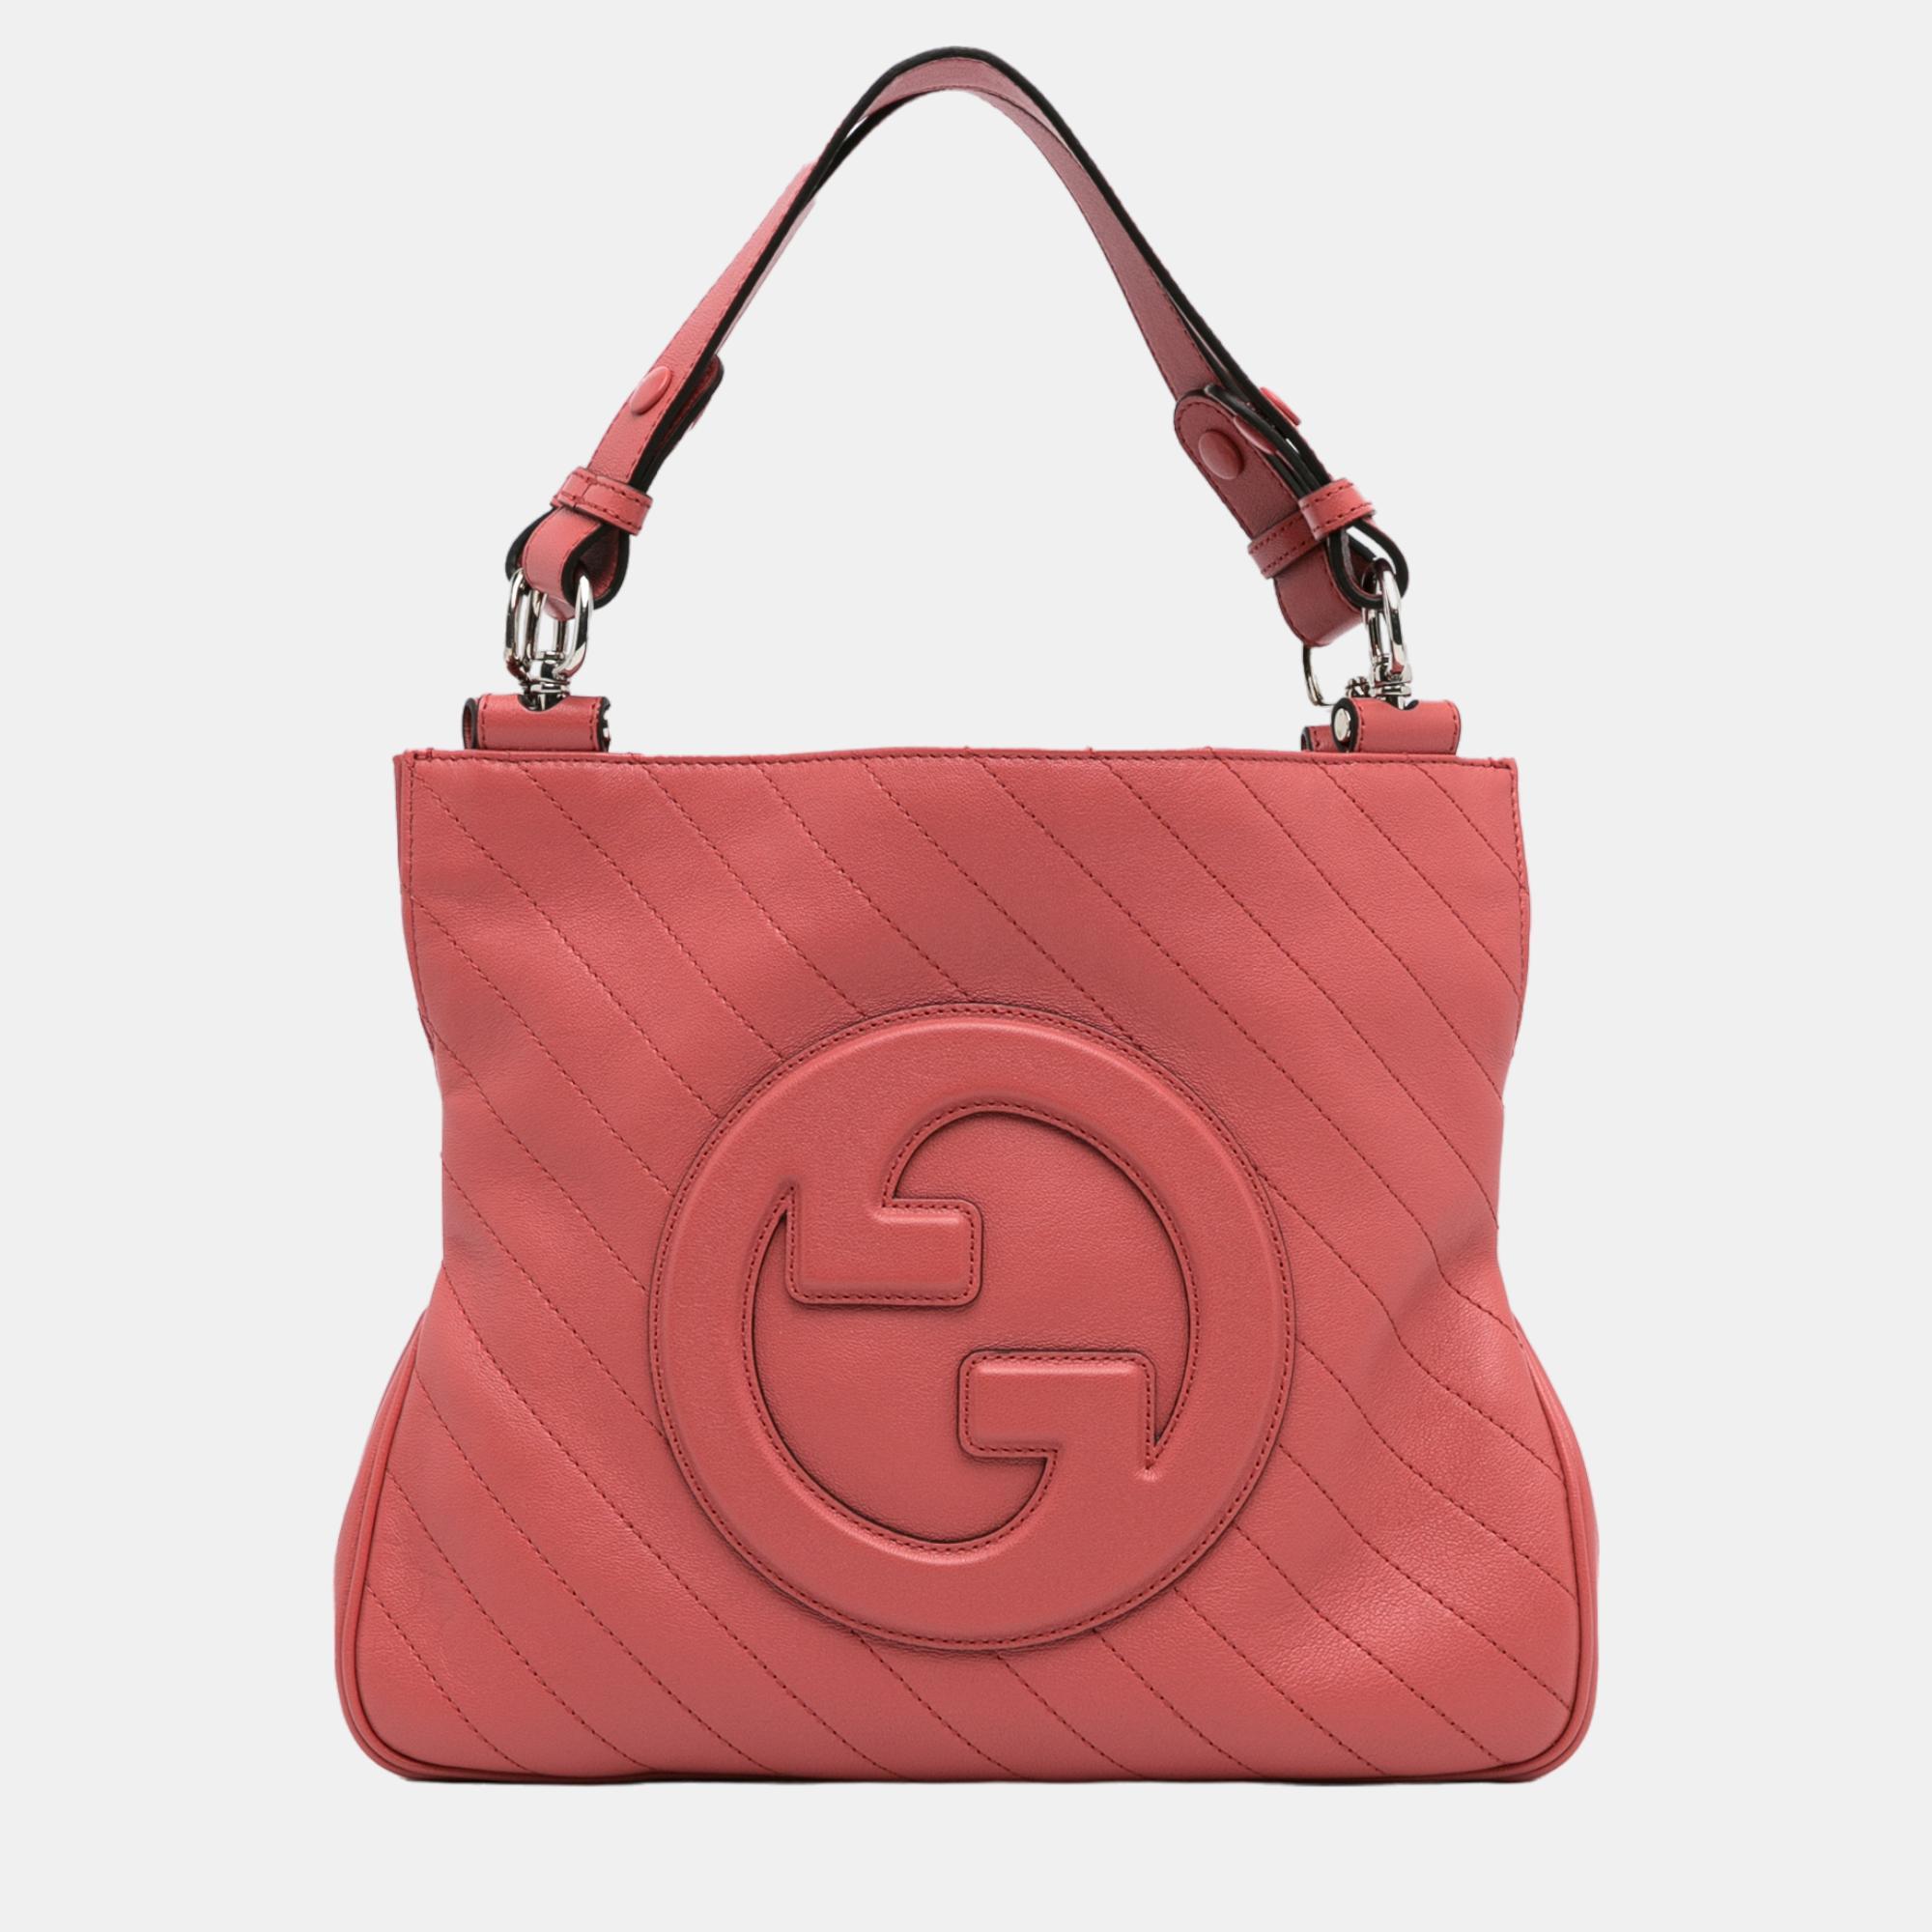 Gucci pink small blondie satchel